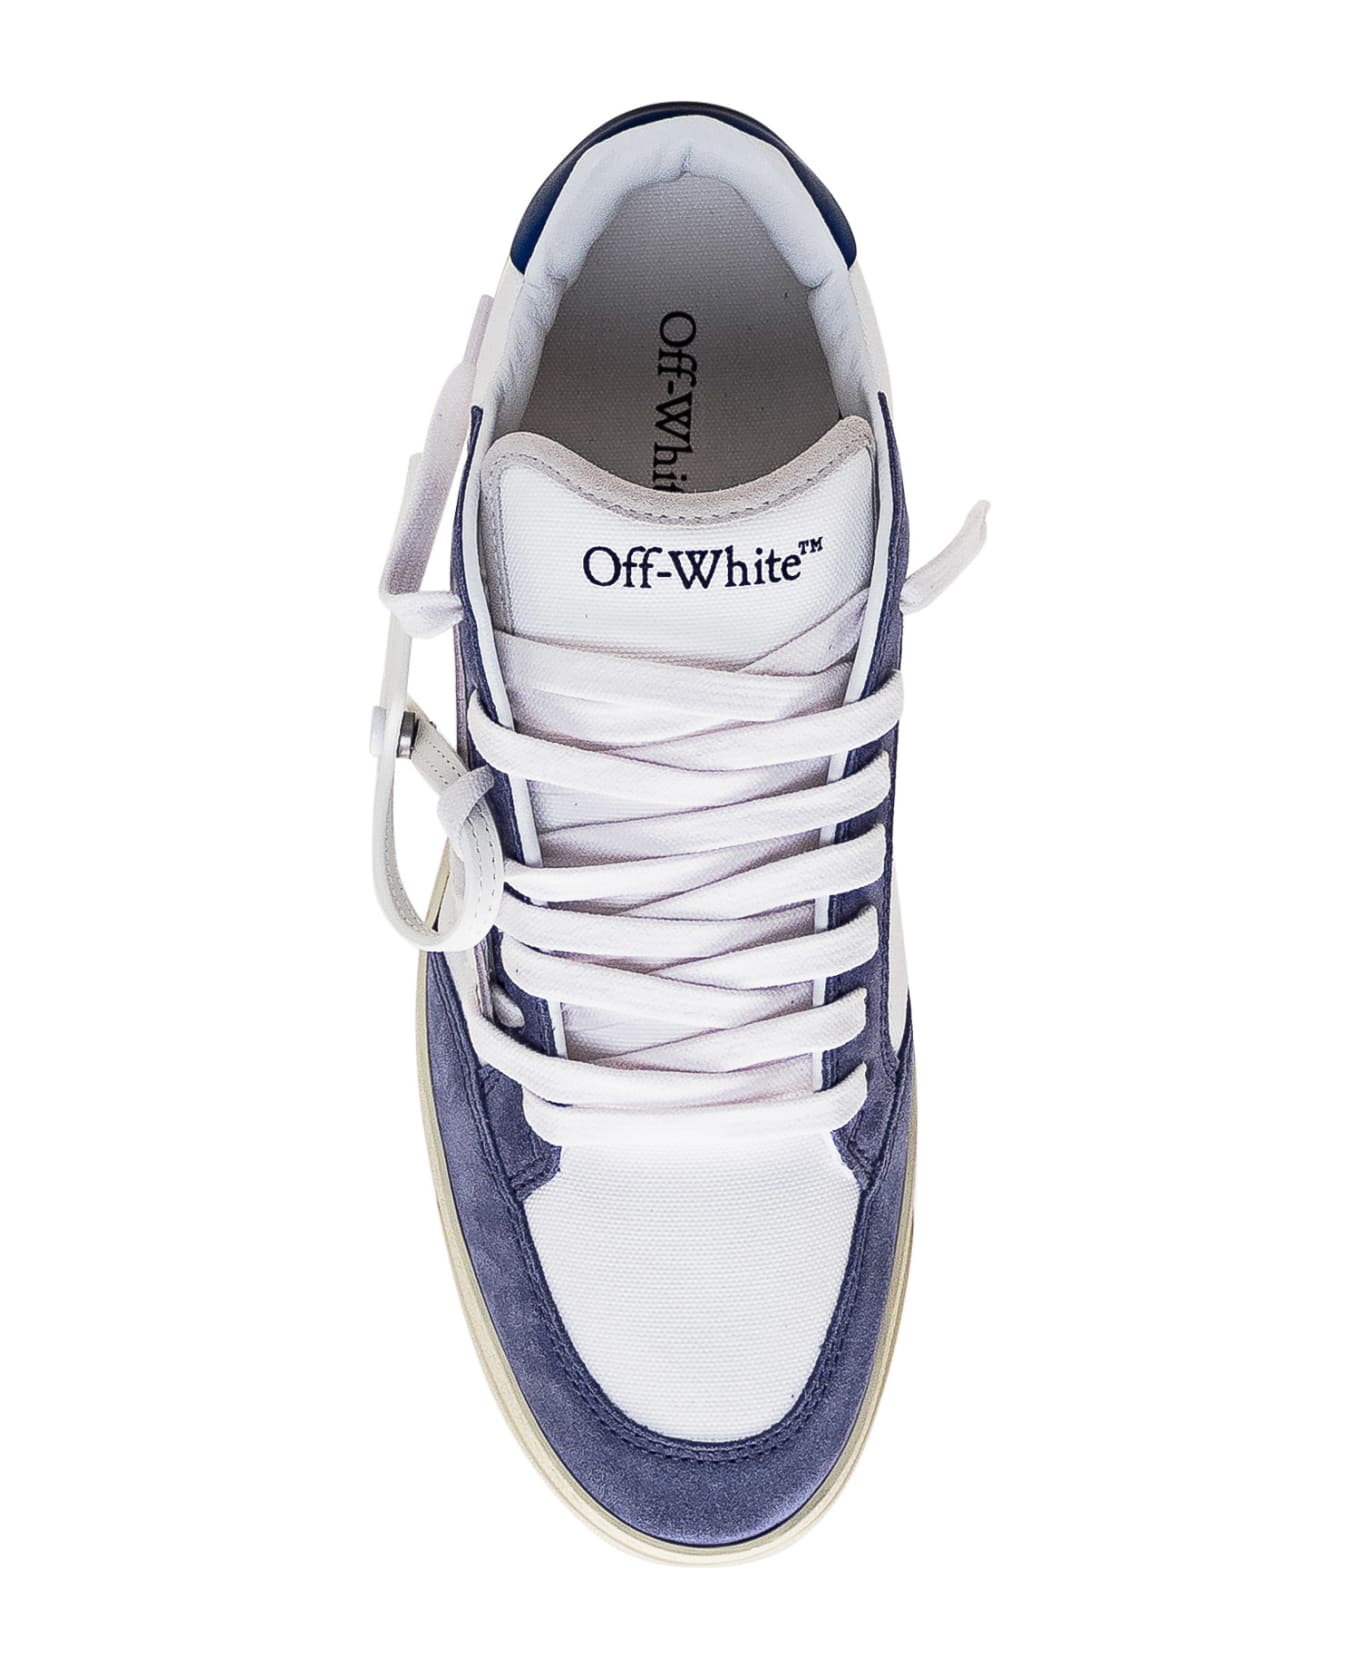 Off-White Sneakers 5.0 - White